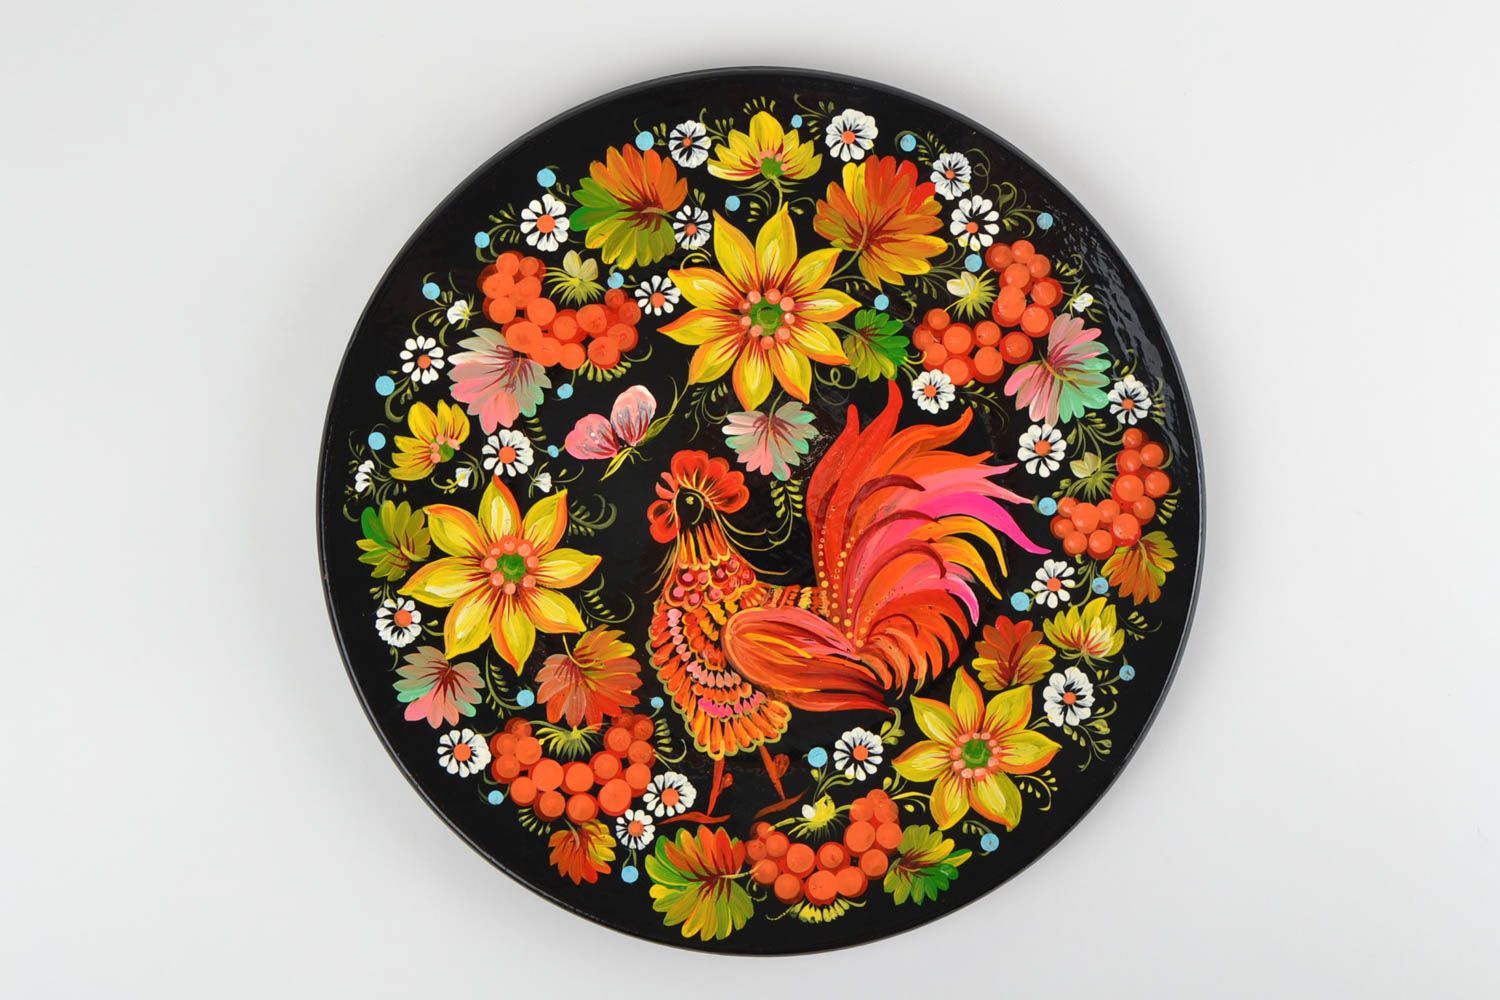 Декоративная тарелка на стену яркая расписная ручной работы круглая хэнд мейд фото 7